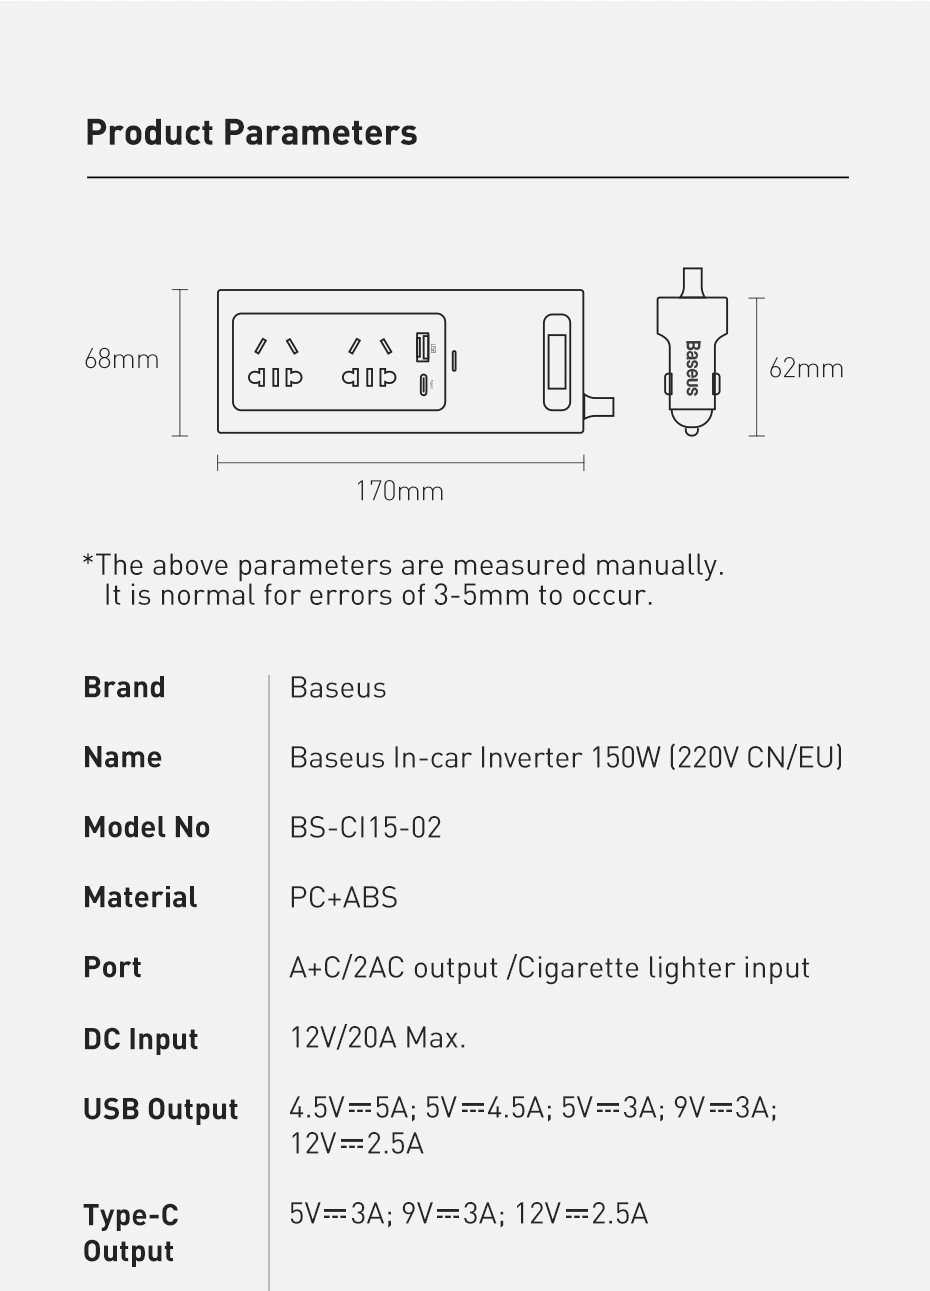 Baseus In-car Inverter 150W (220V CN/EU) Specs